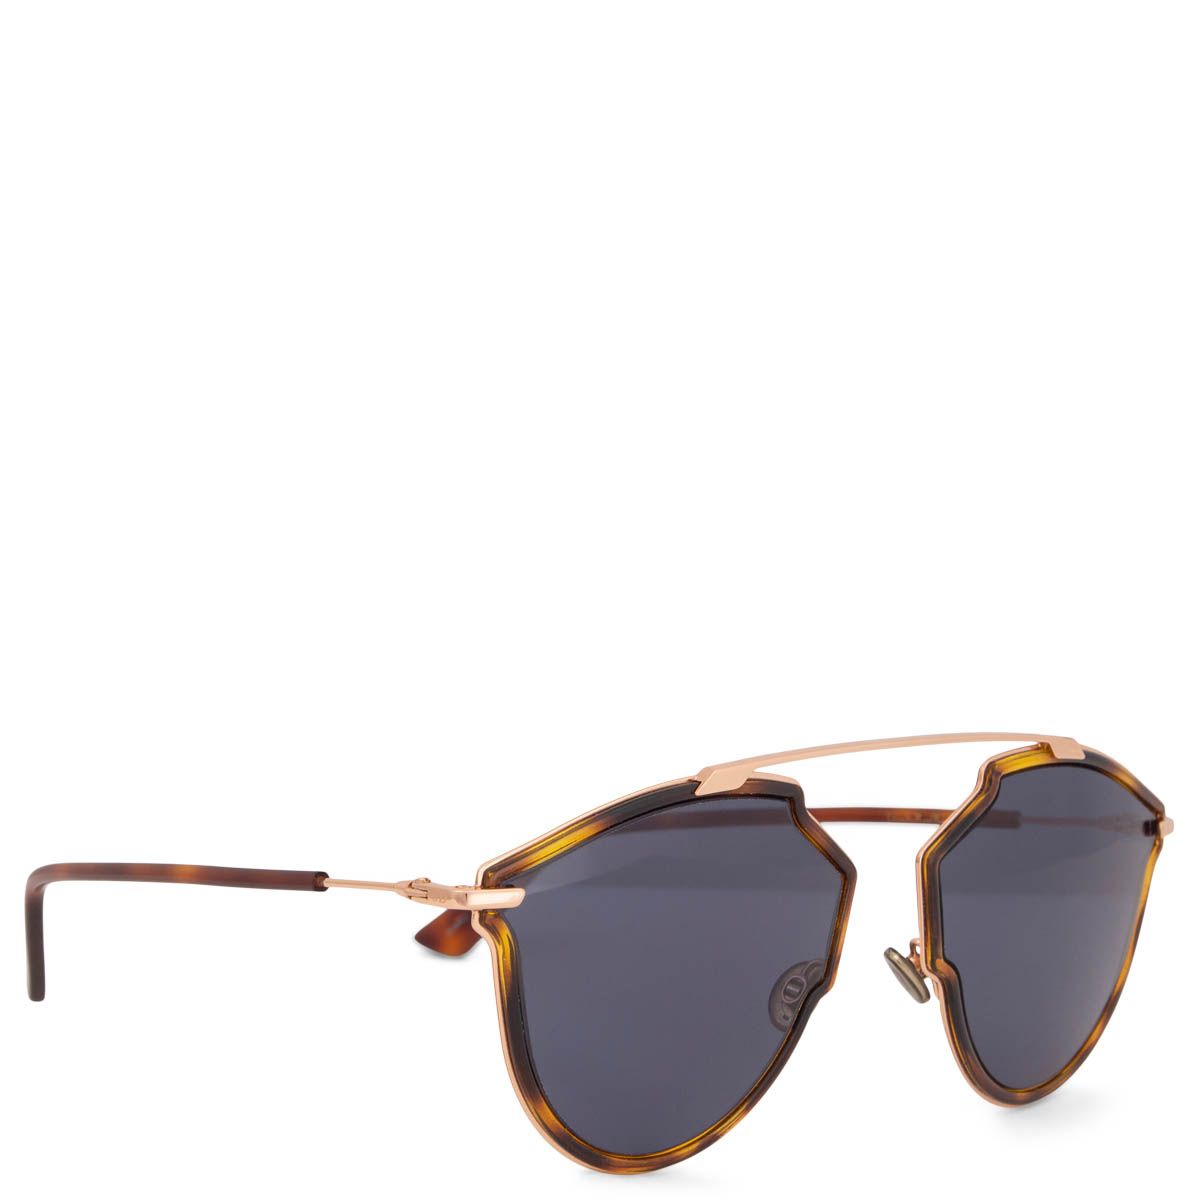 Christian Dior 'So Real Rise' Sunglasses